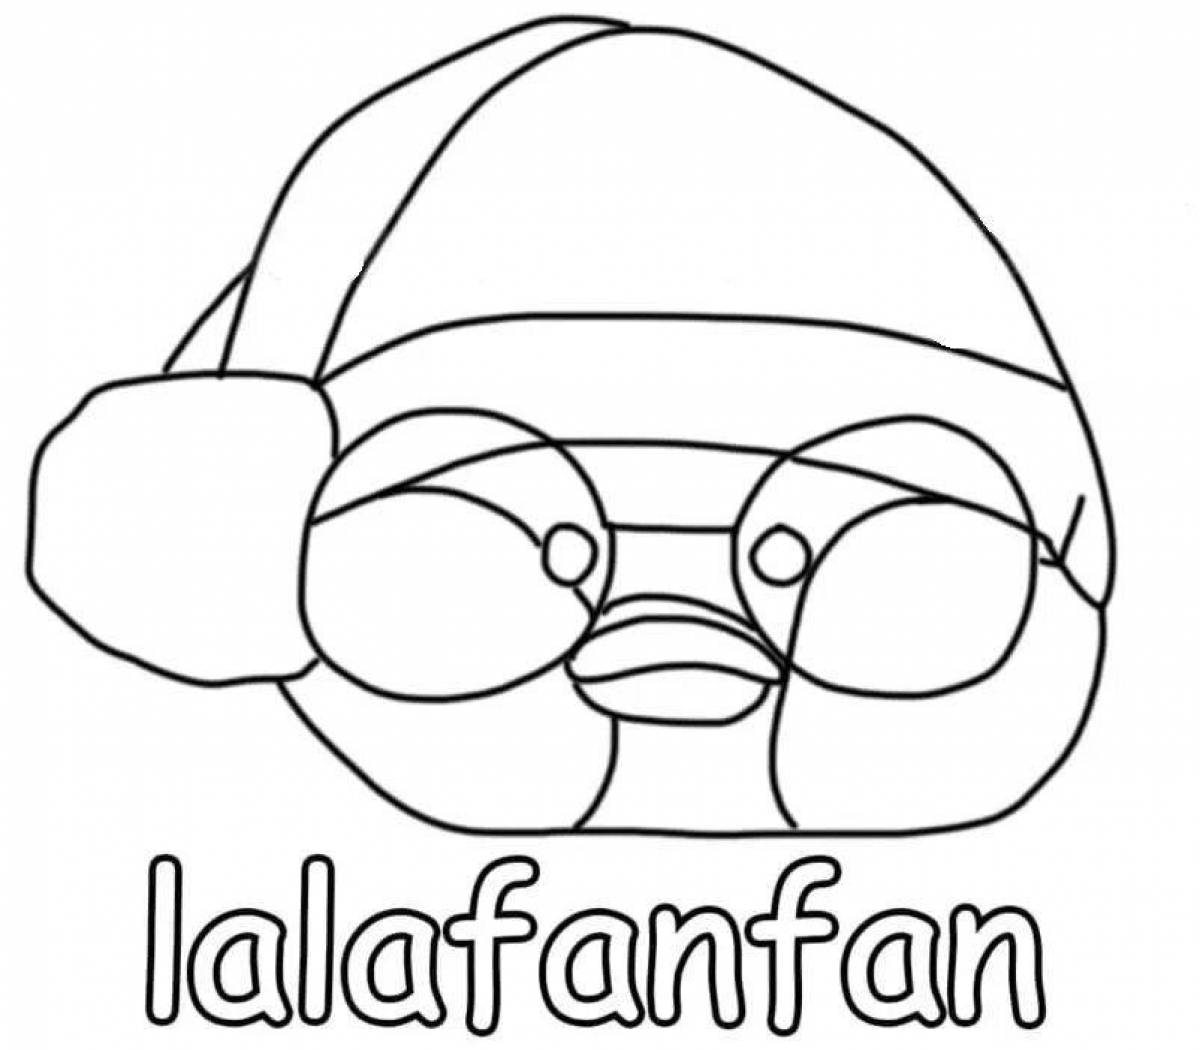 Раскраска fun duck lalafanfan